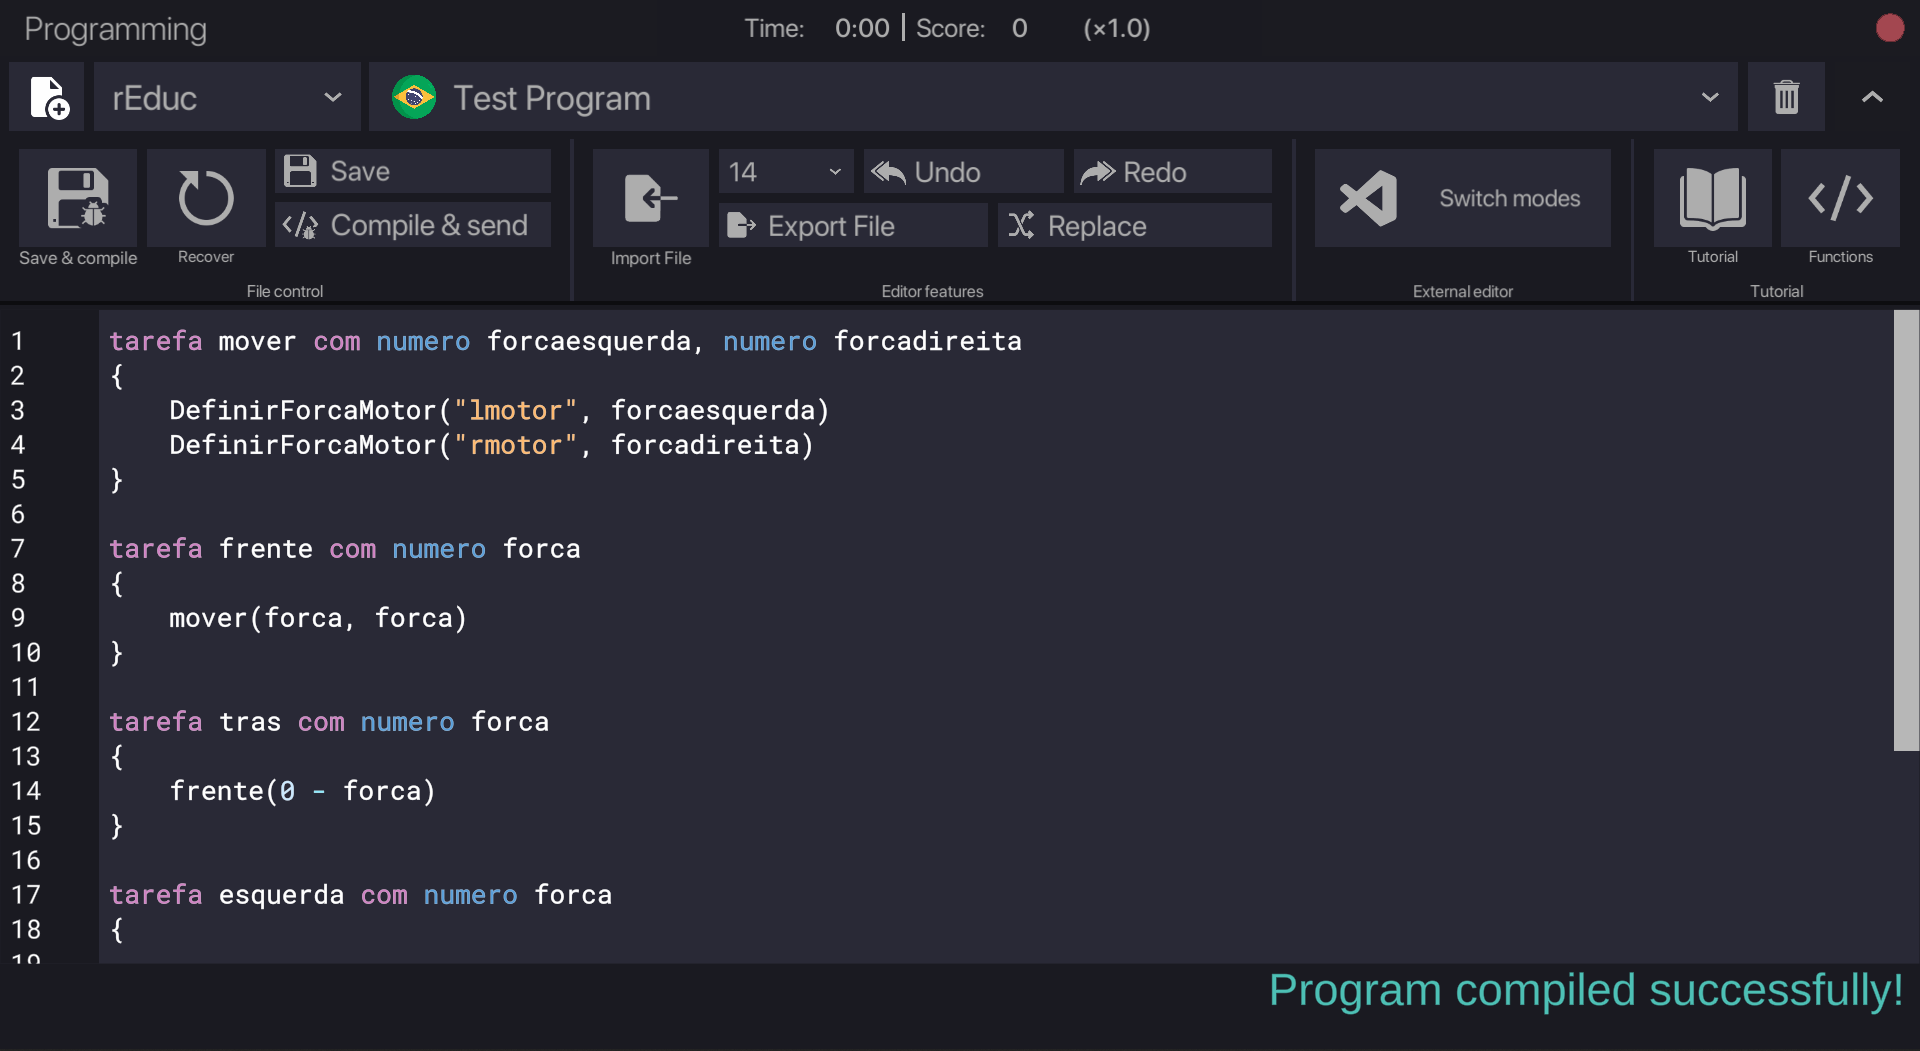 Interface for Programming in sBotics Simulator